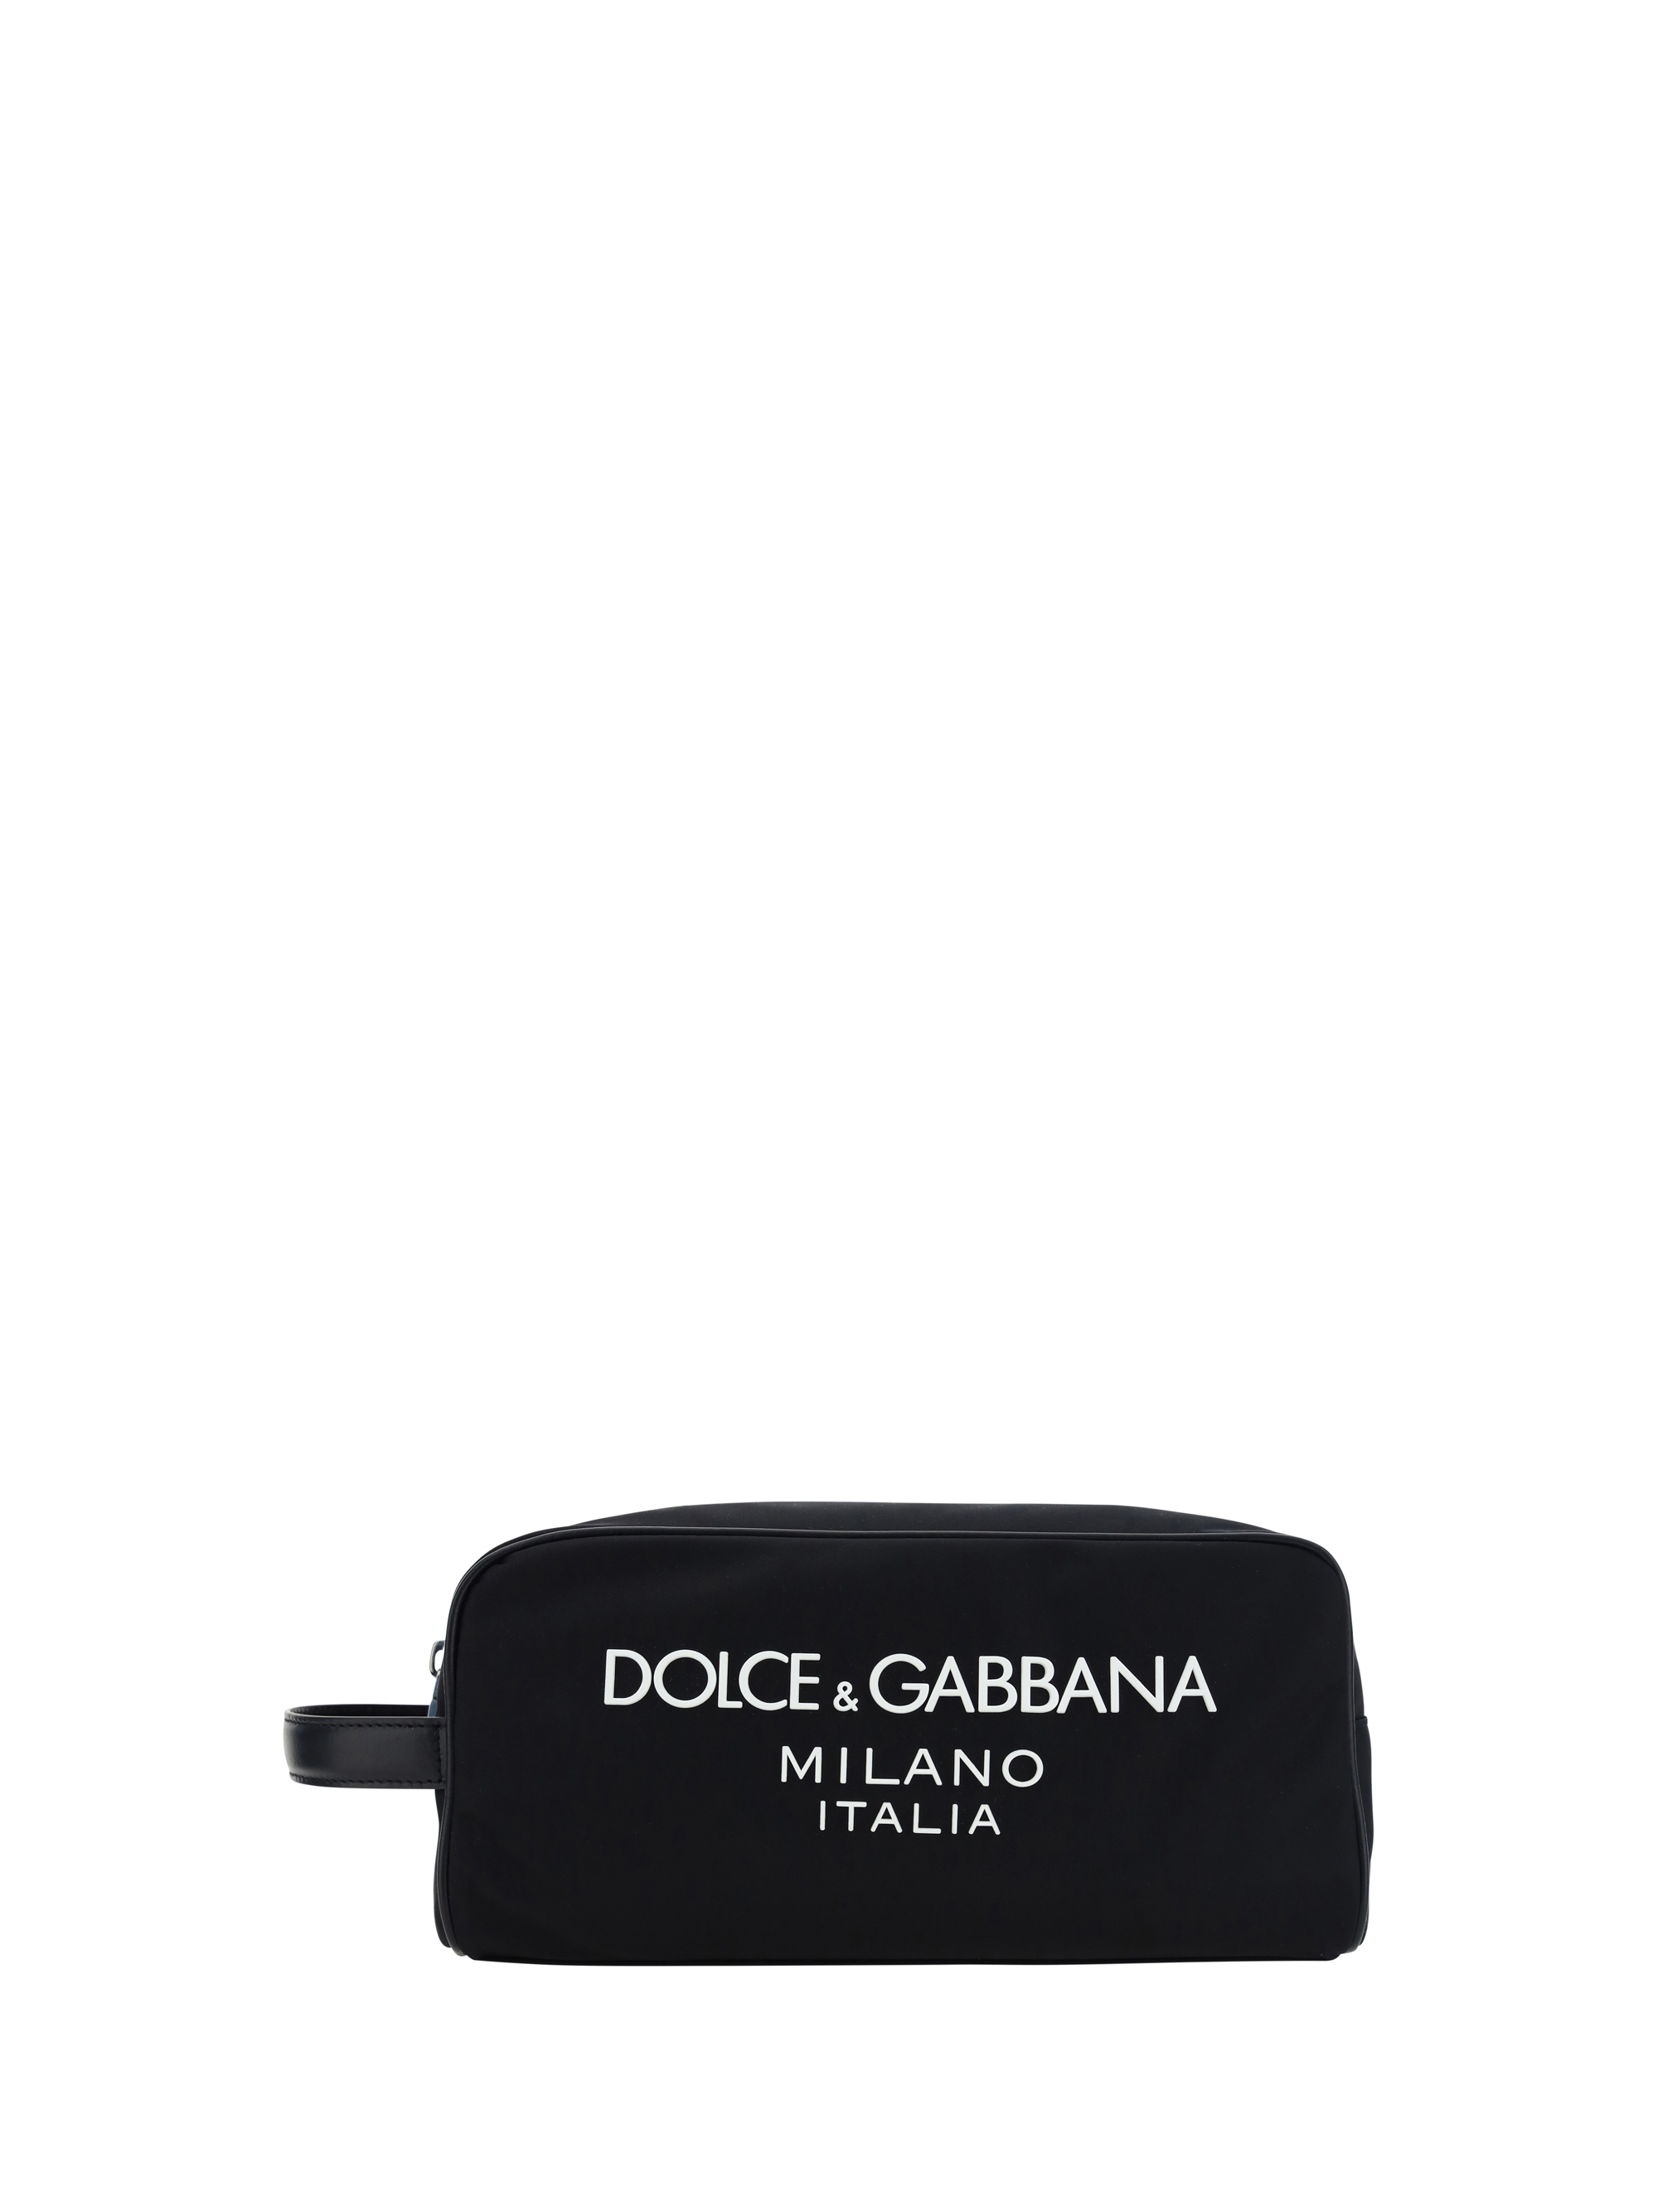 Dolce & Gabbana Beauty Case In Nero/nero